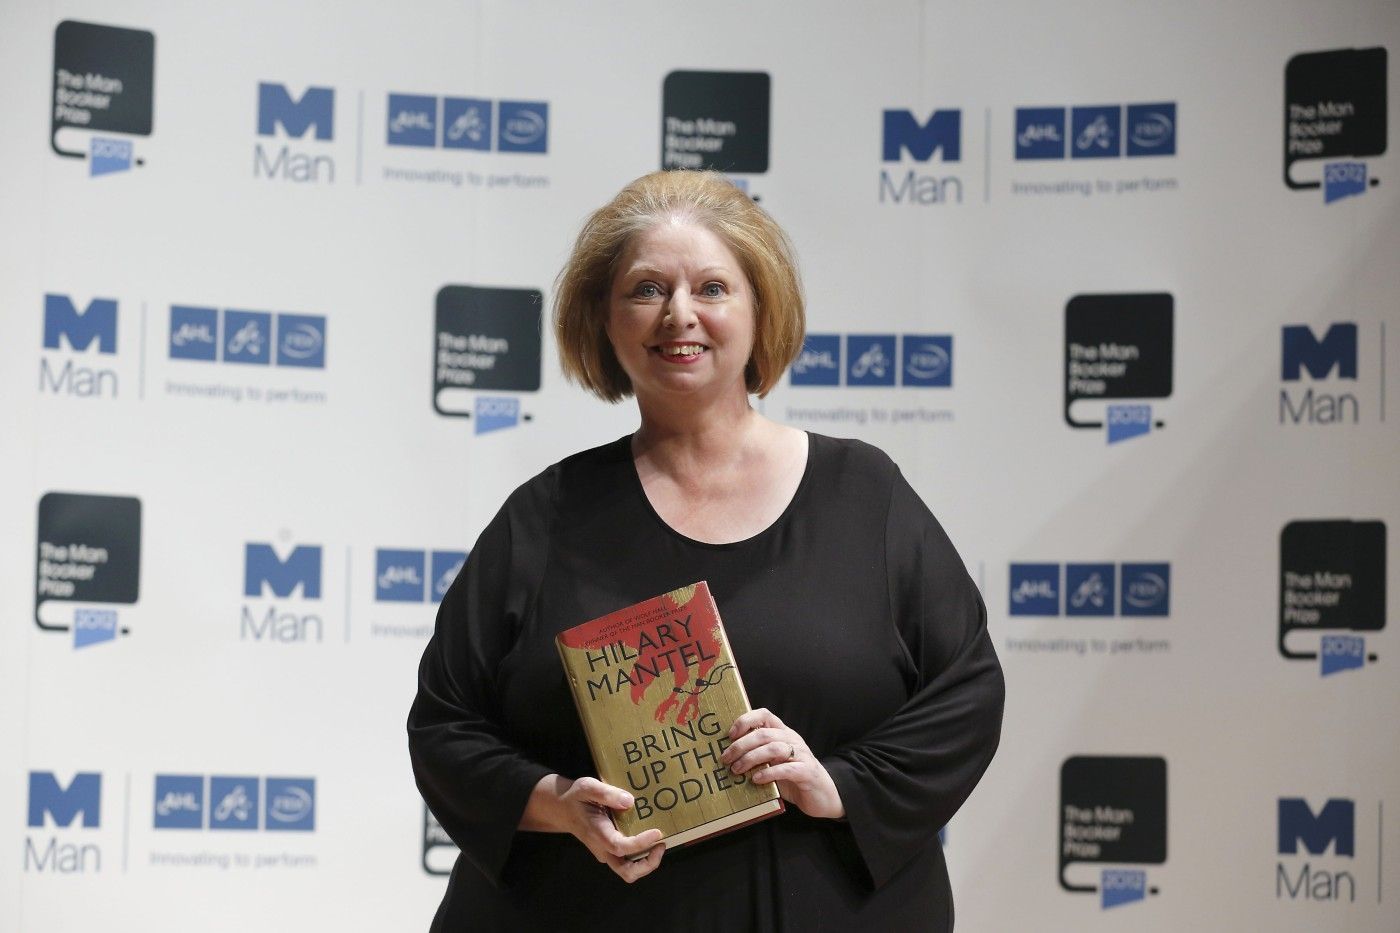 Man Booker Prize - Hilary Mantel